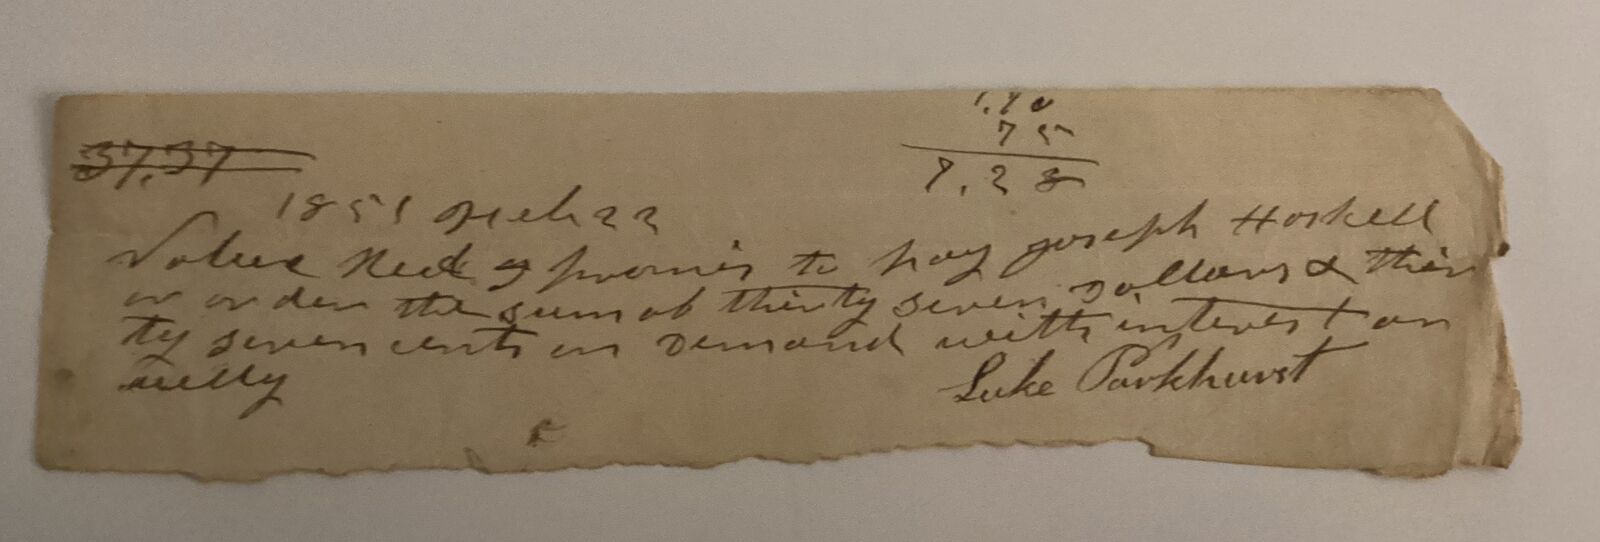 Handwritten Receipt Document ID Signed Luke Parkhurst 1851 Antique Genealogy